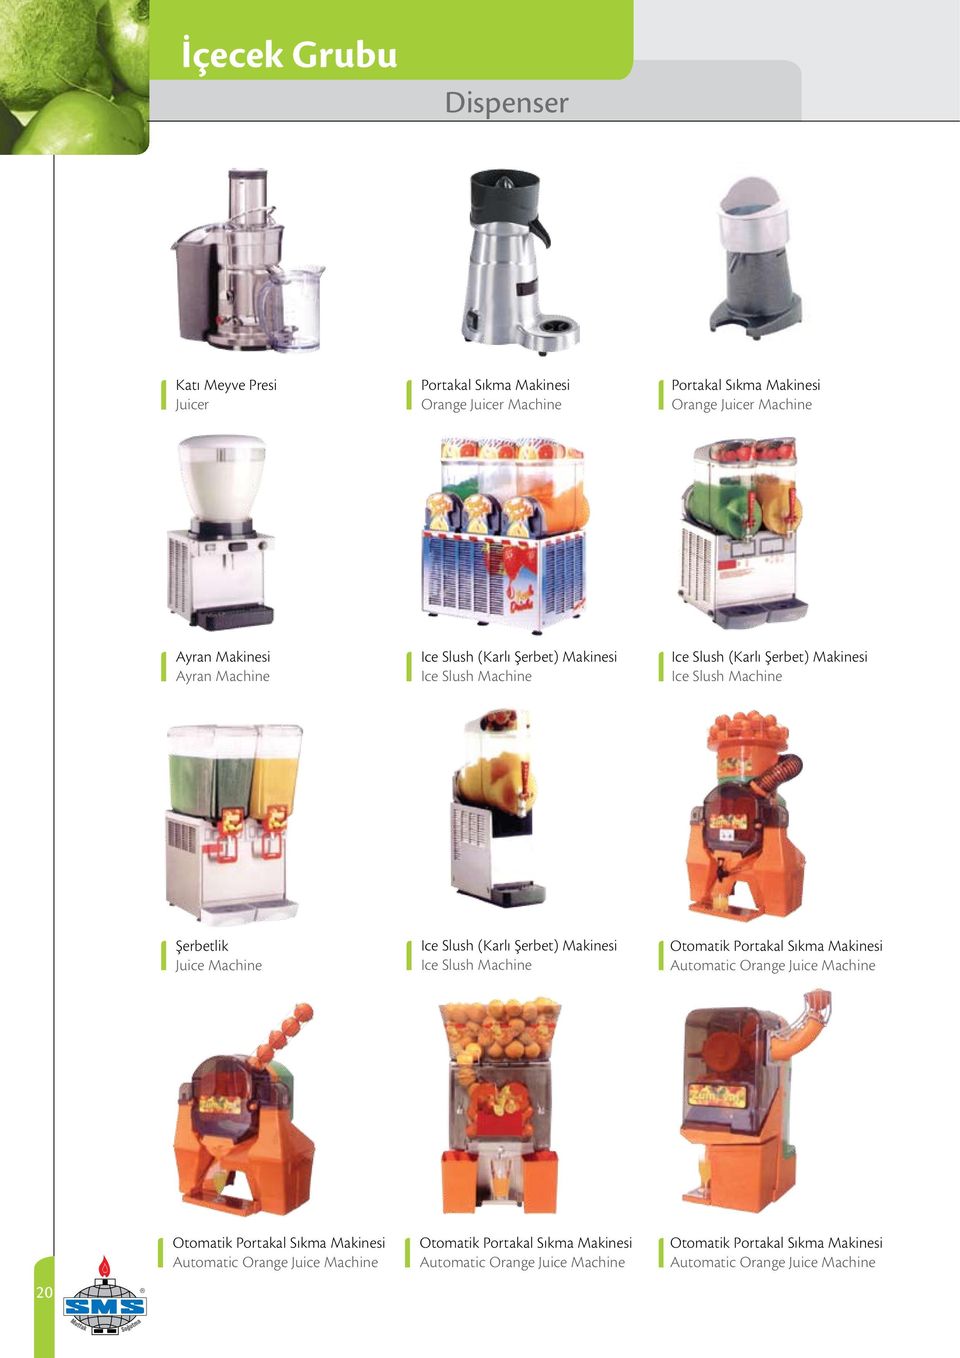 Ice Slush (Karlı Şerbet) Makinesi Ice Slush Machine Otomatik Portakal Sıkma Makinesi Automatic Orange Juice Machine 20 Otomatik Portakal Sıkma Makinesi